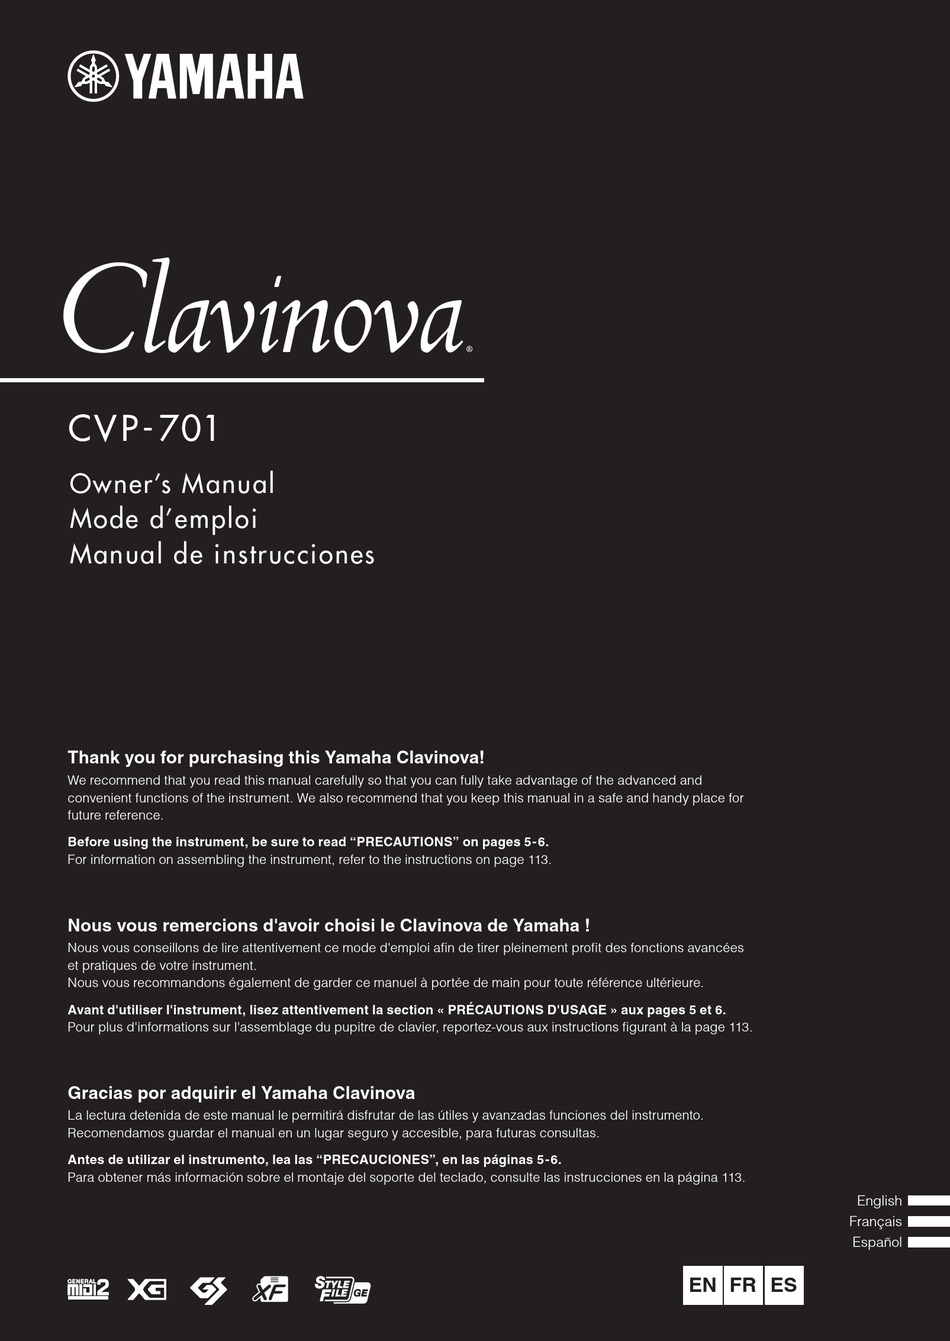 YAMAHA CLAVINOVA CVP-701 OWNER'S MANUAL Pdf Download | ManualsLib